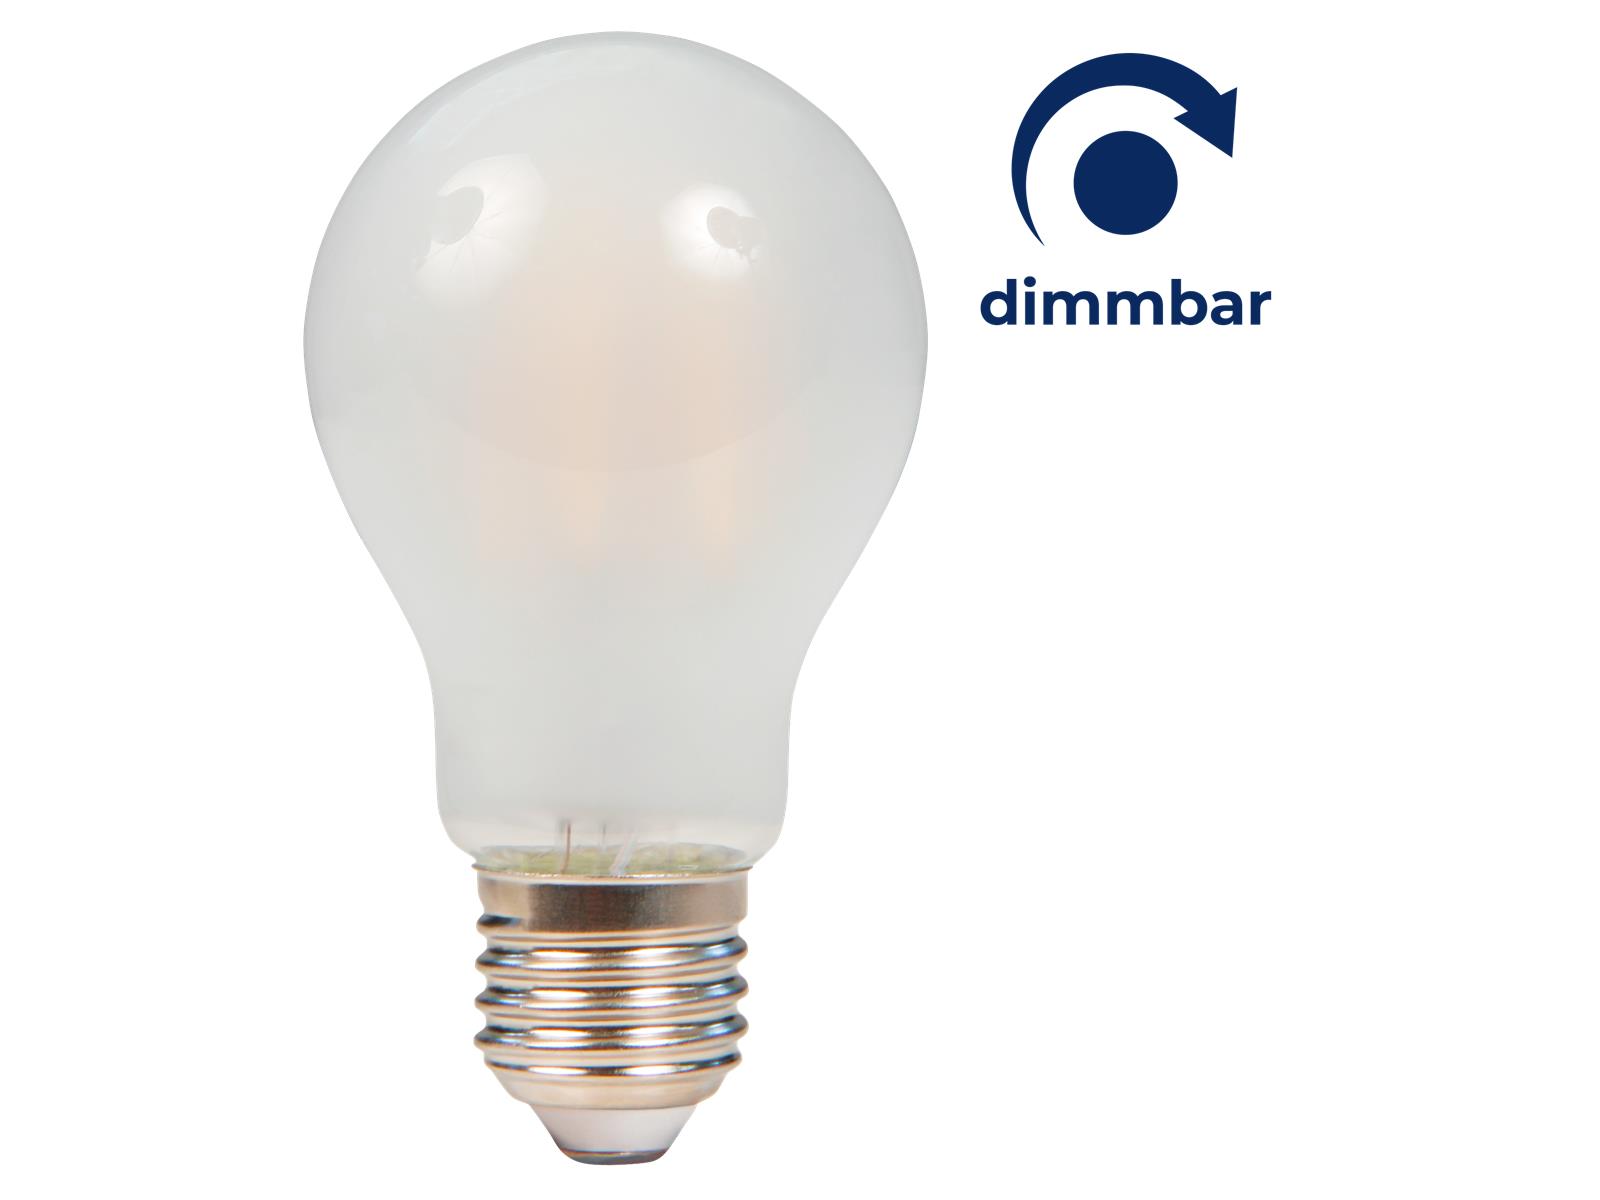 LED Filament Glühlampe McShine ''Filed'', E27, 7W, 820 lm, warmweiß, dimmbar, matt